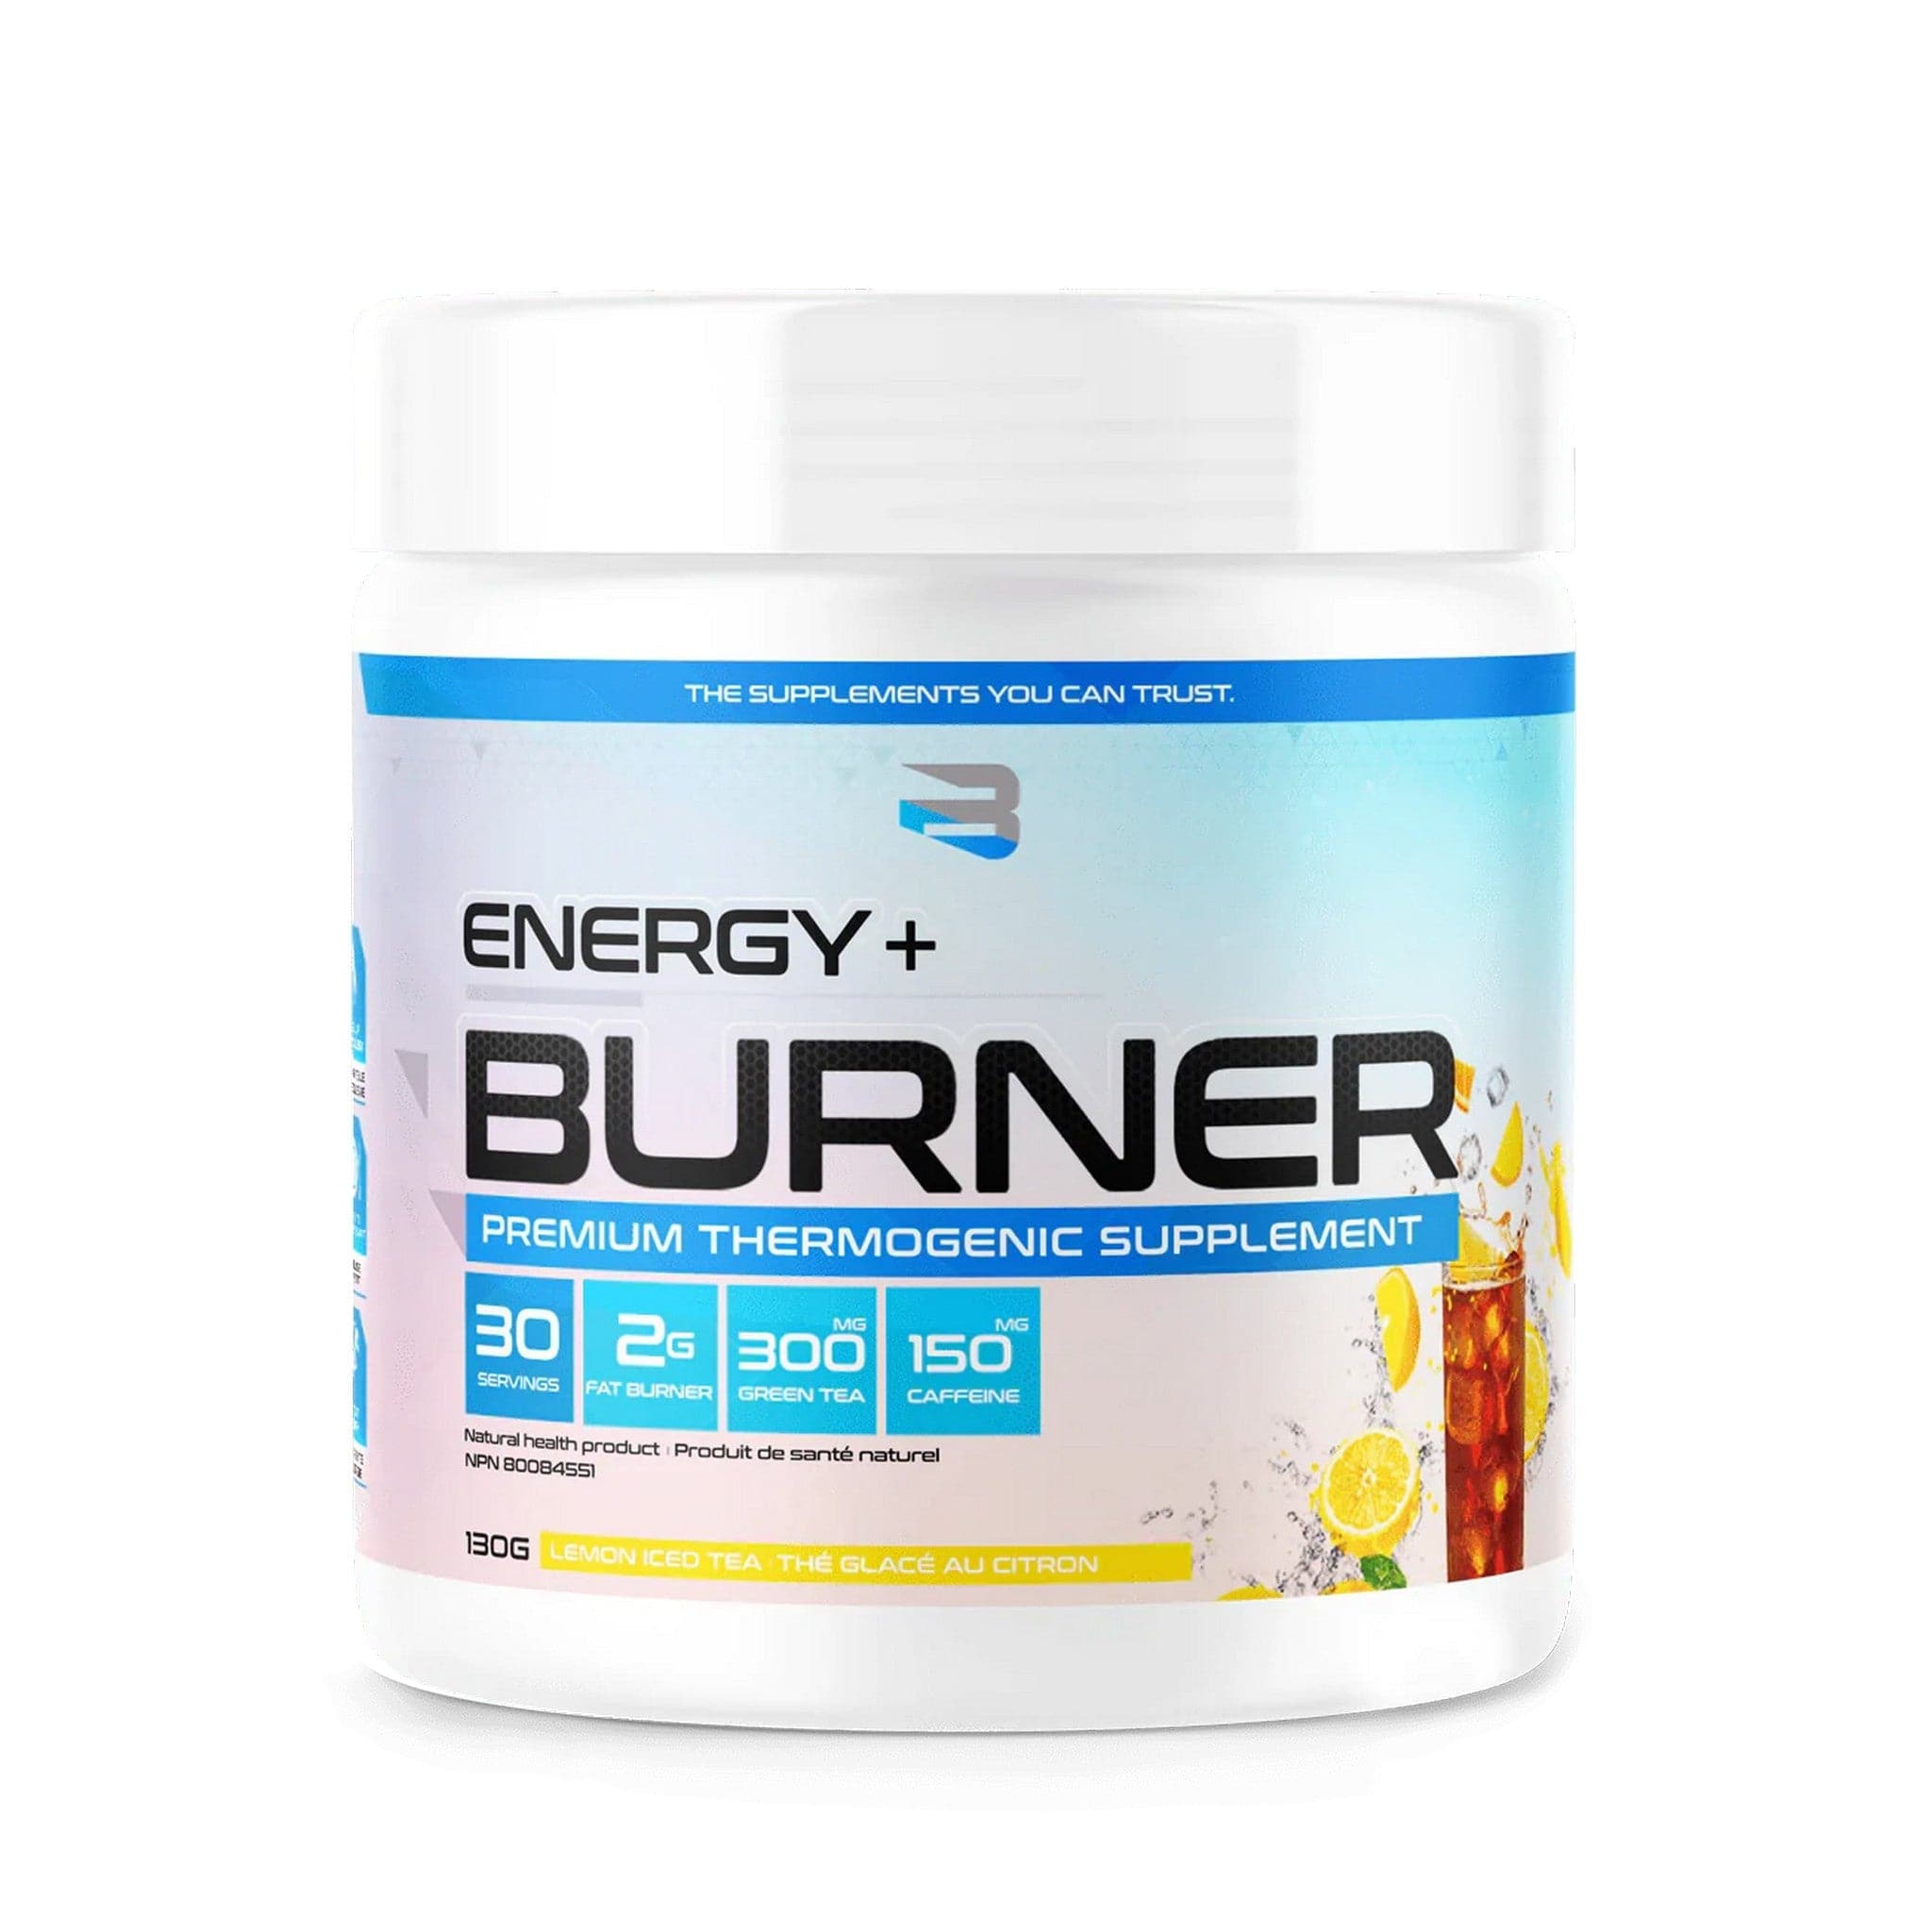 Believe Supplements Energy Burner 30 portions